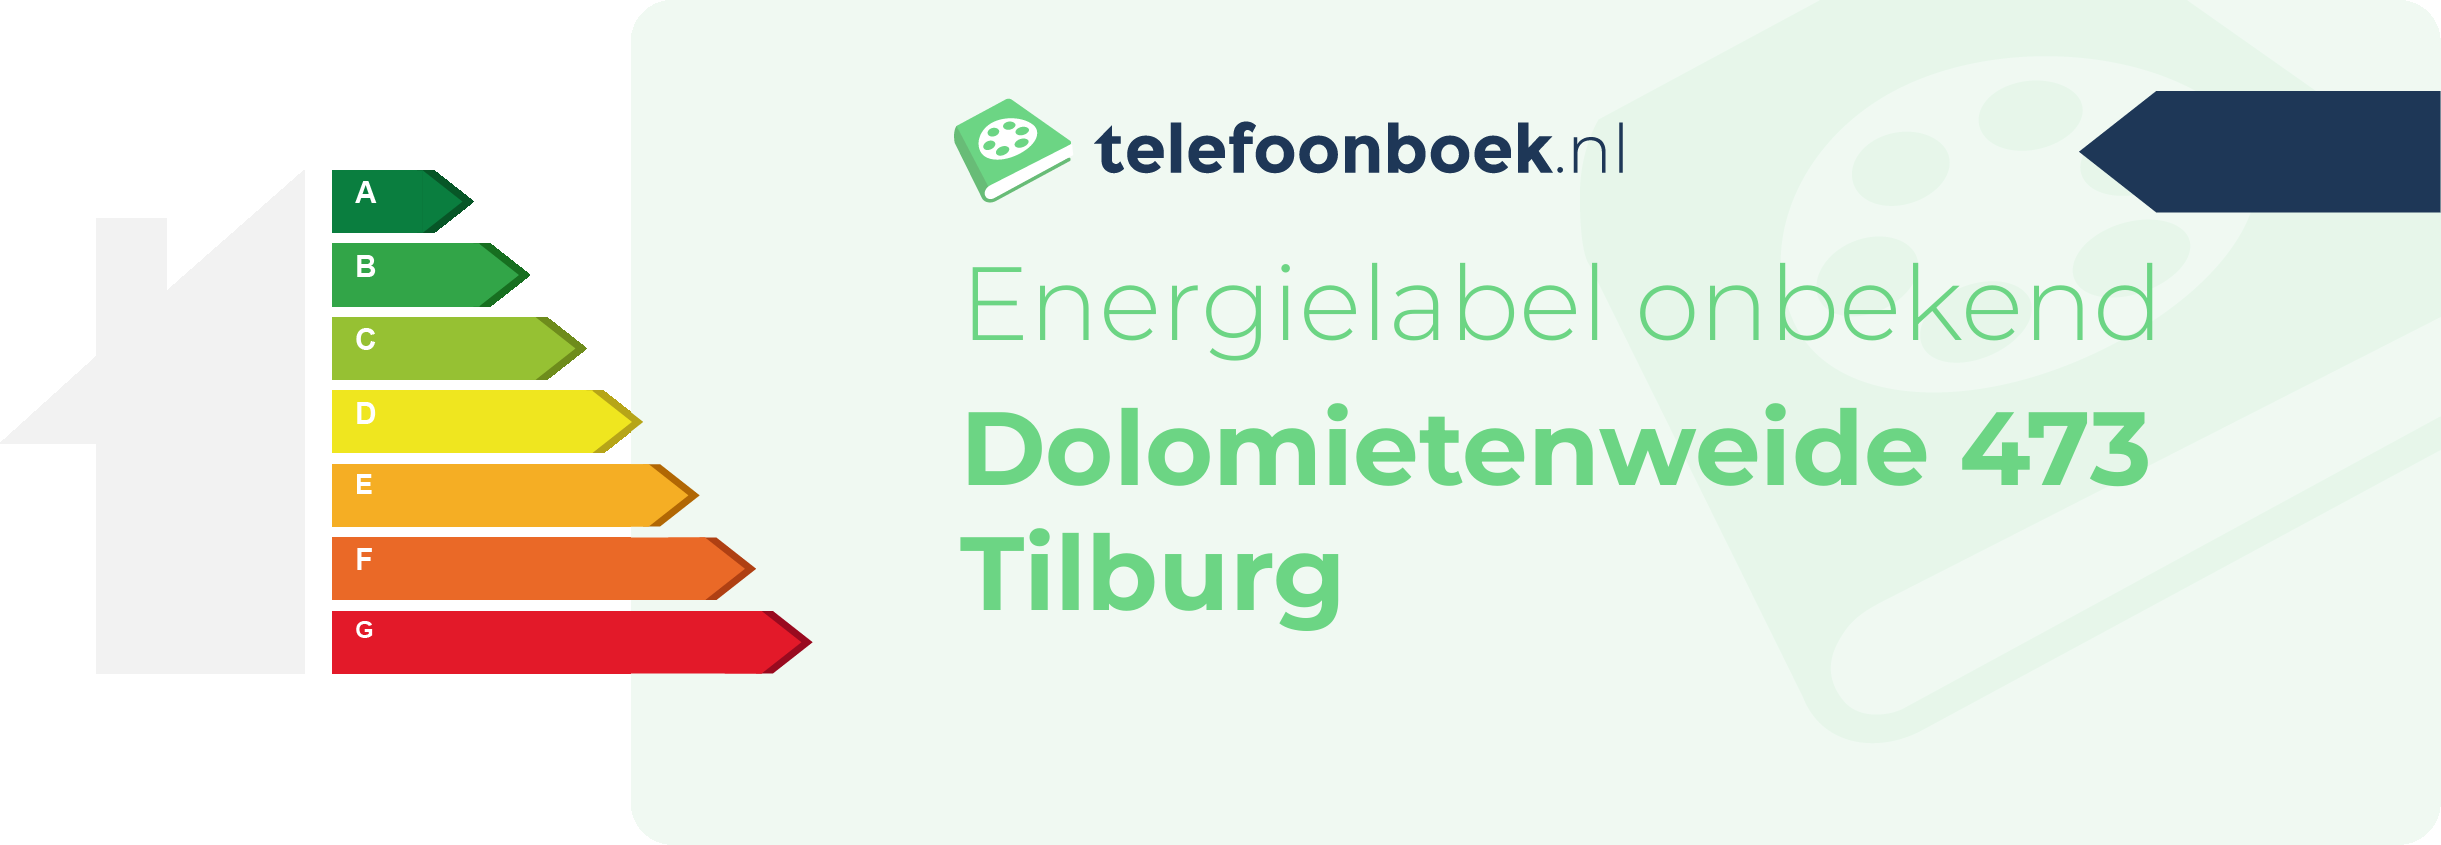 Energielabel Dolomietenweide 473 Tilburg